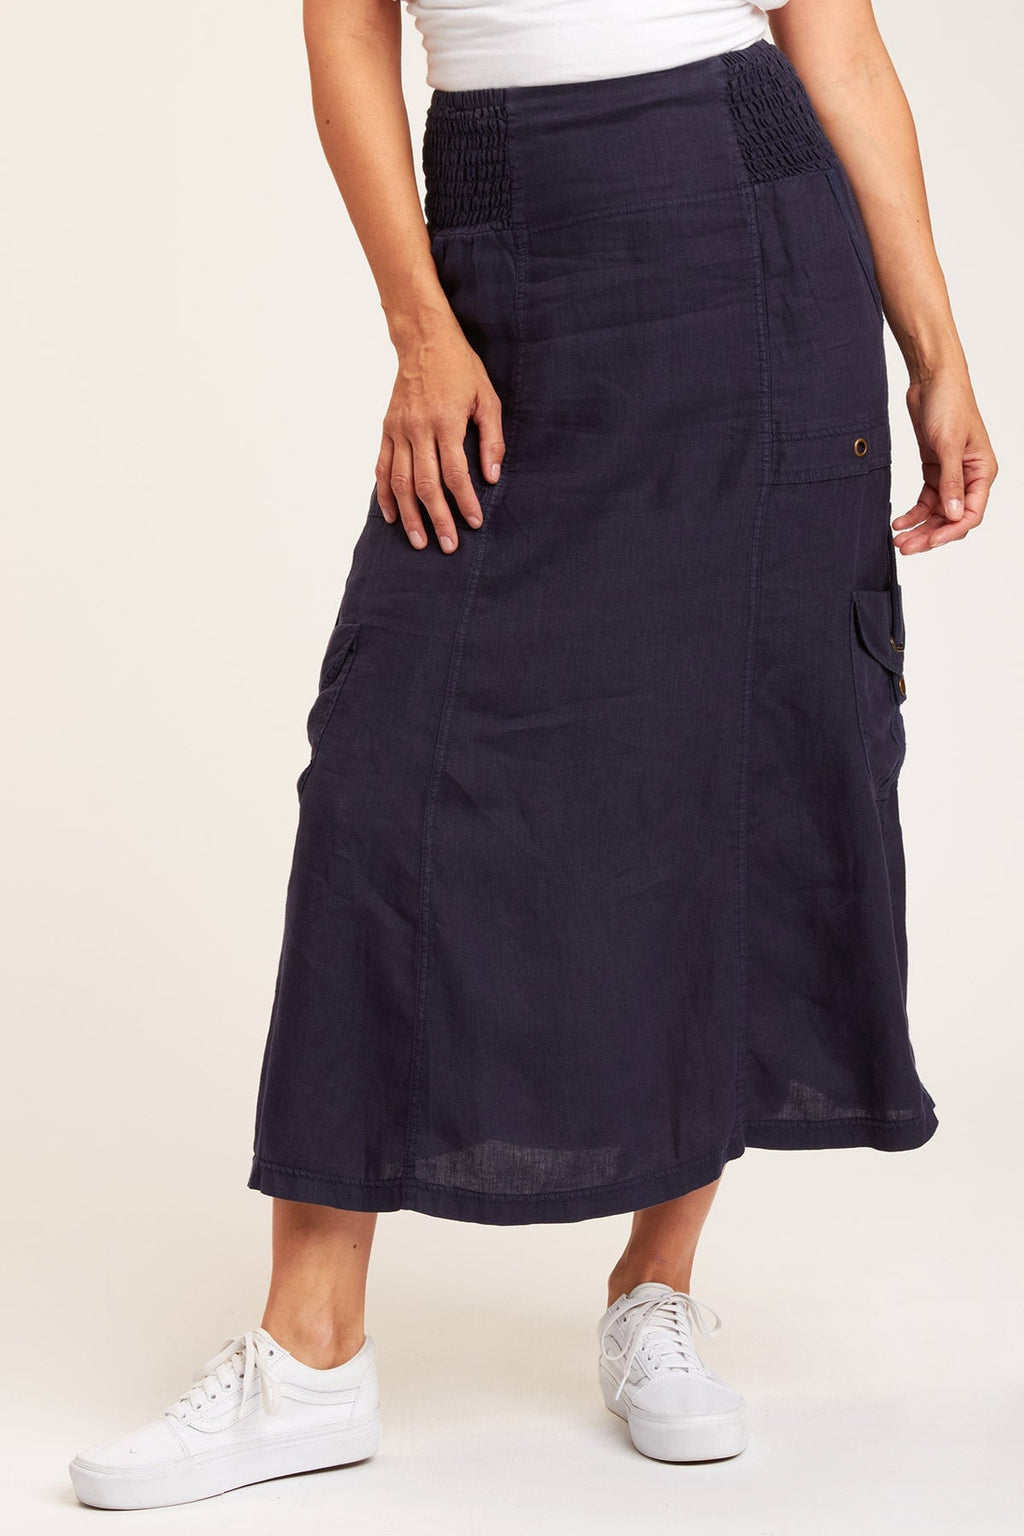 in Francine Maxi – XCVI Navy Skirt